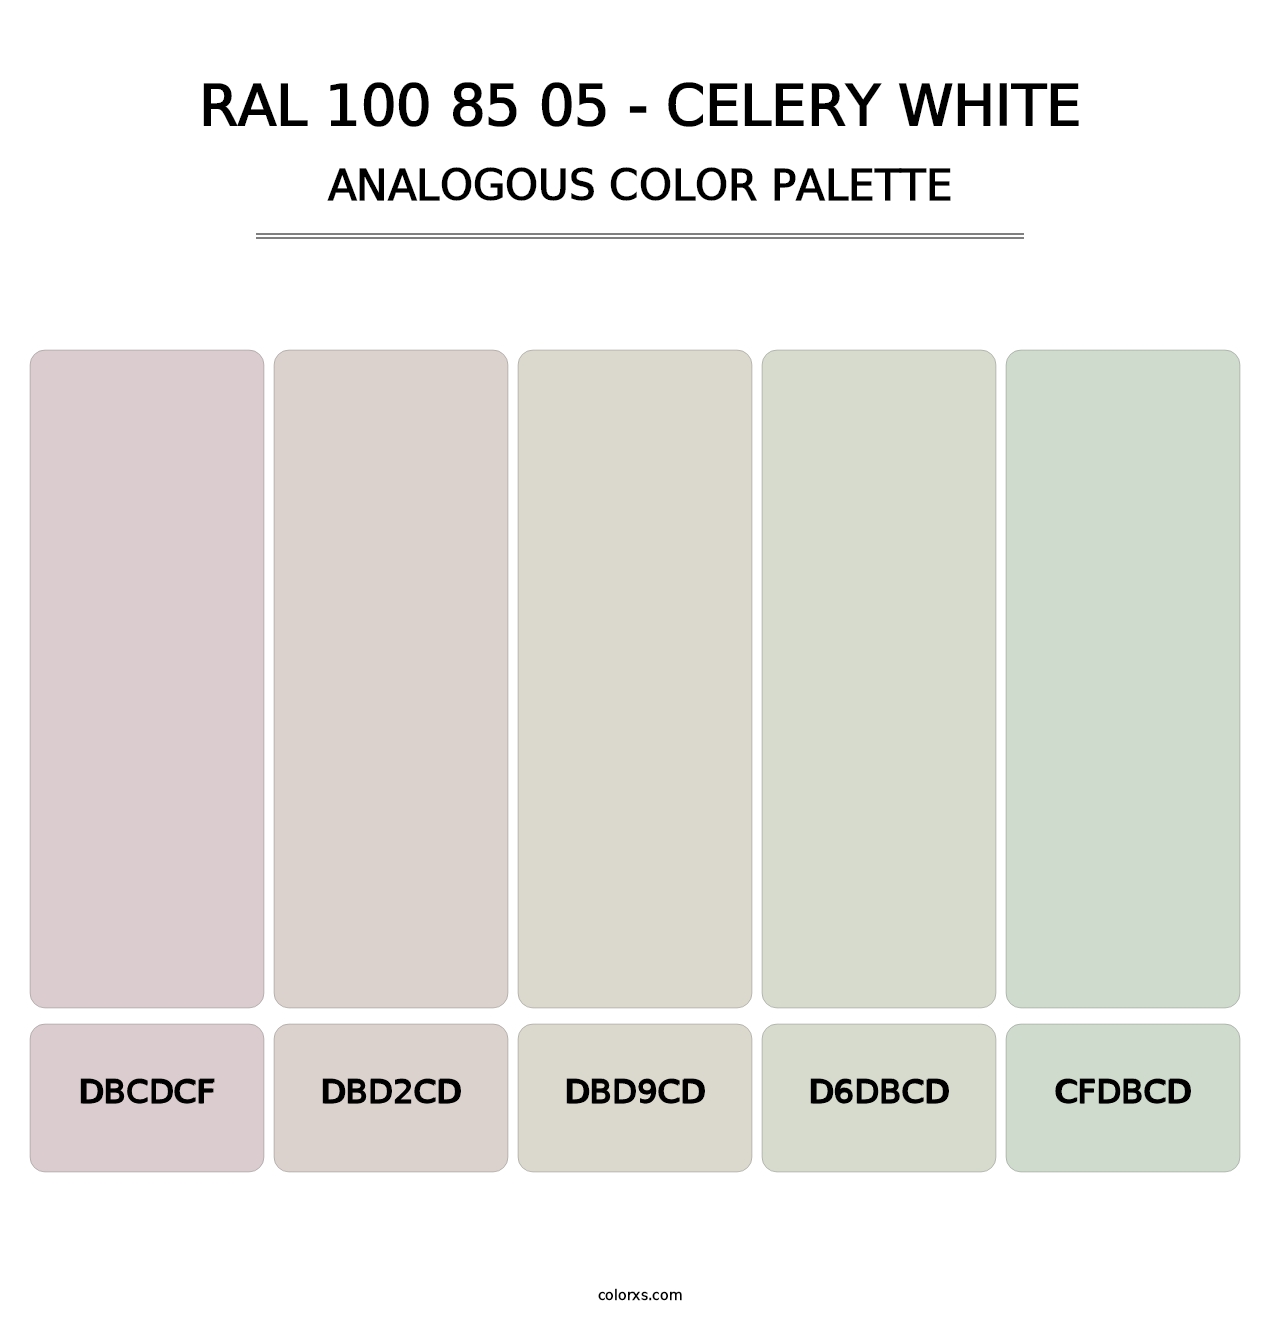 RAL 100 85 05 - Celery White - Analogous Color Palette